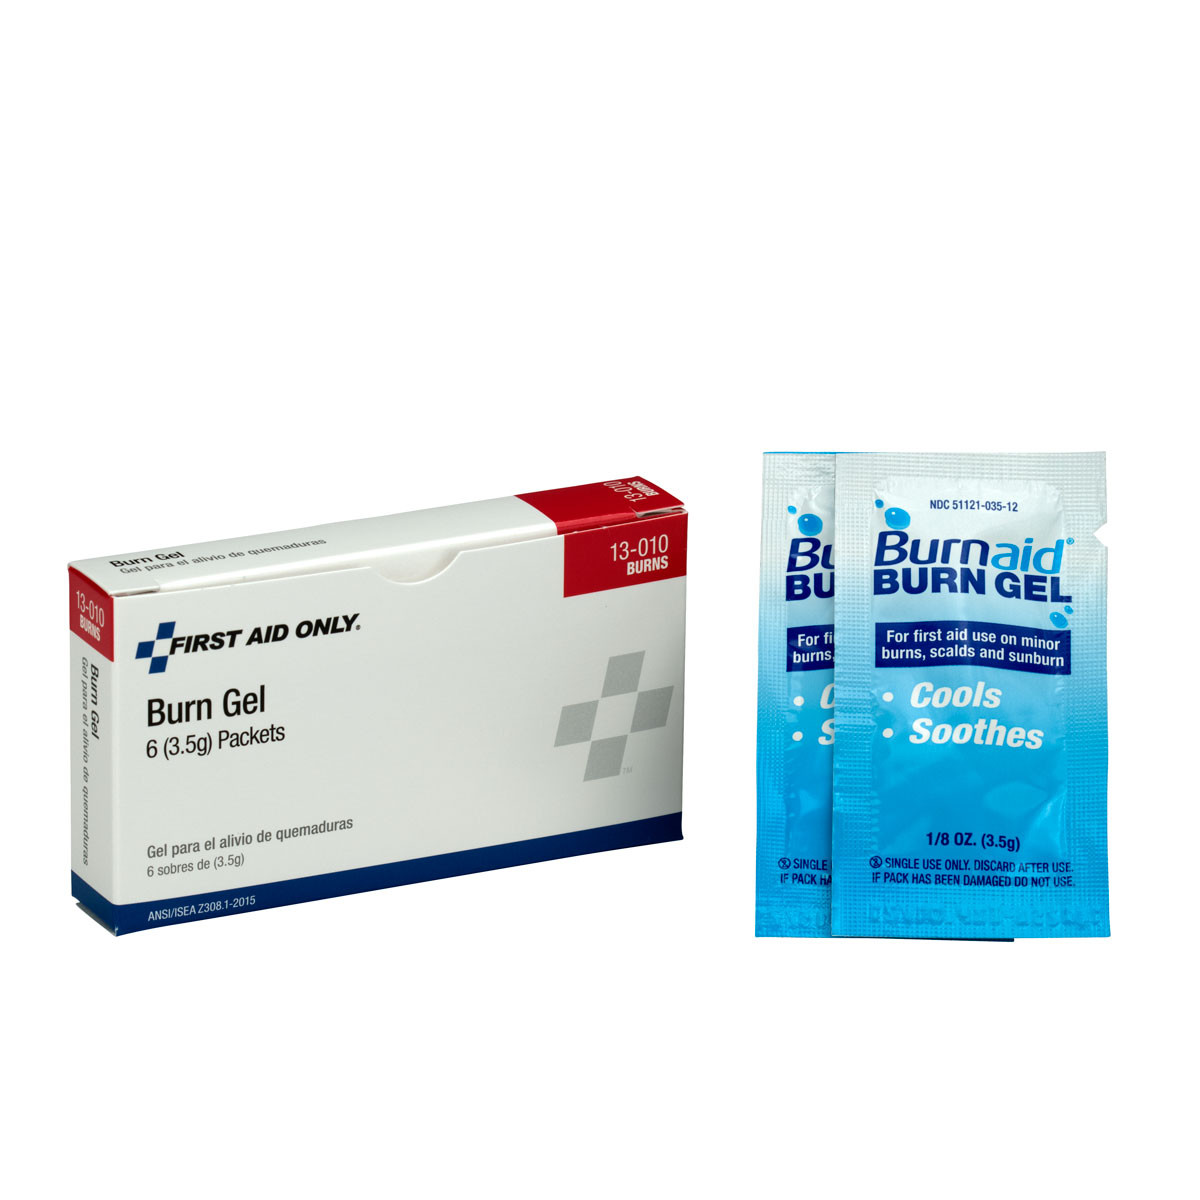 Burn Gel (3.5g) Packets - First Aid Safety